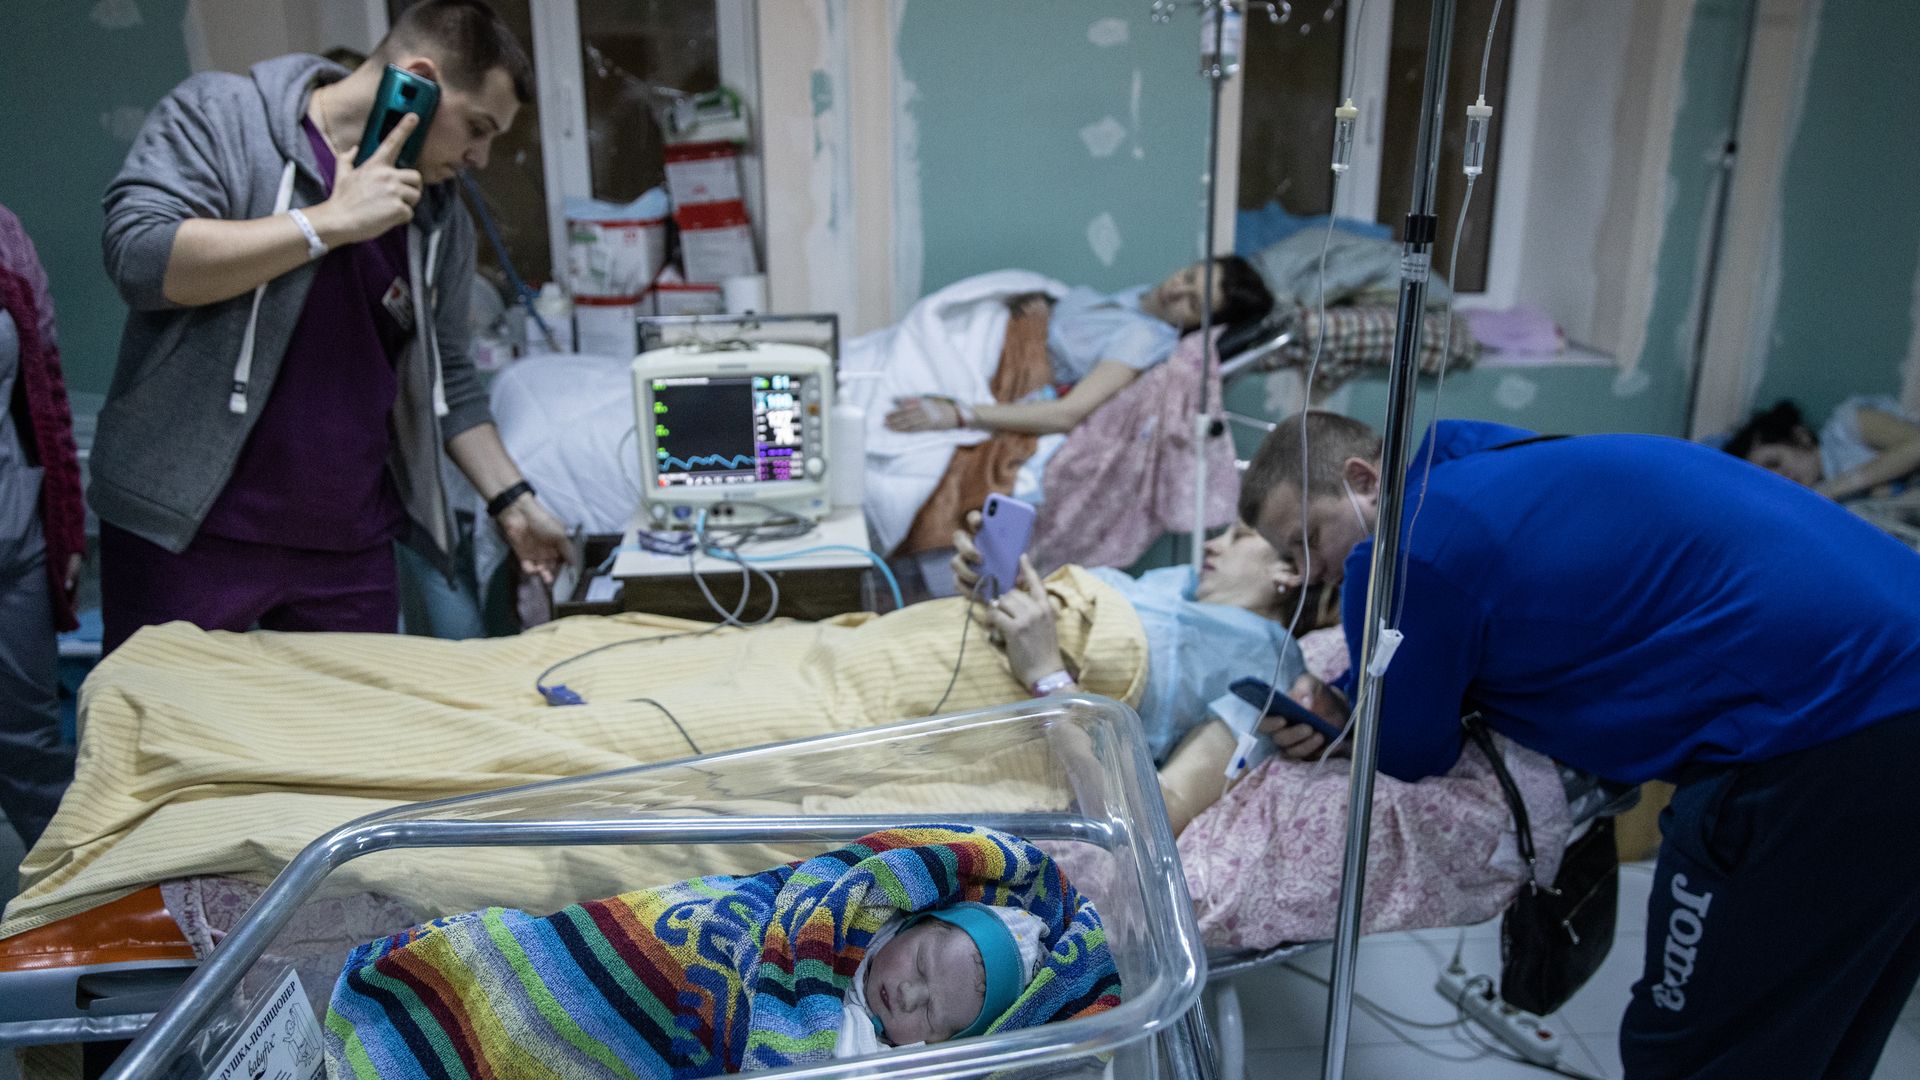 Maternity hospital in a bomb shelter, ukraine